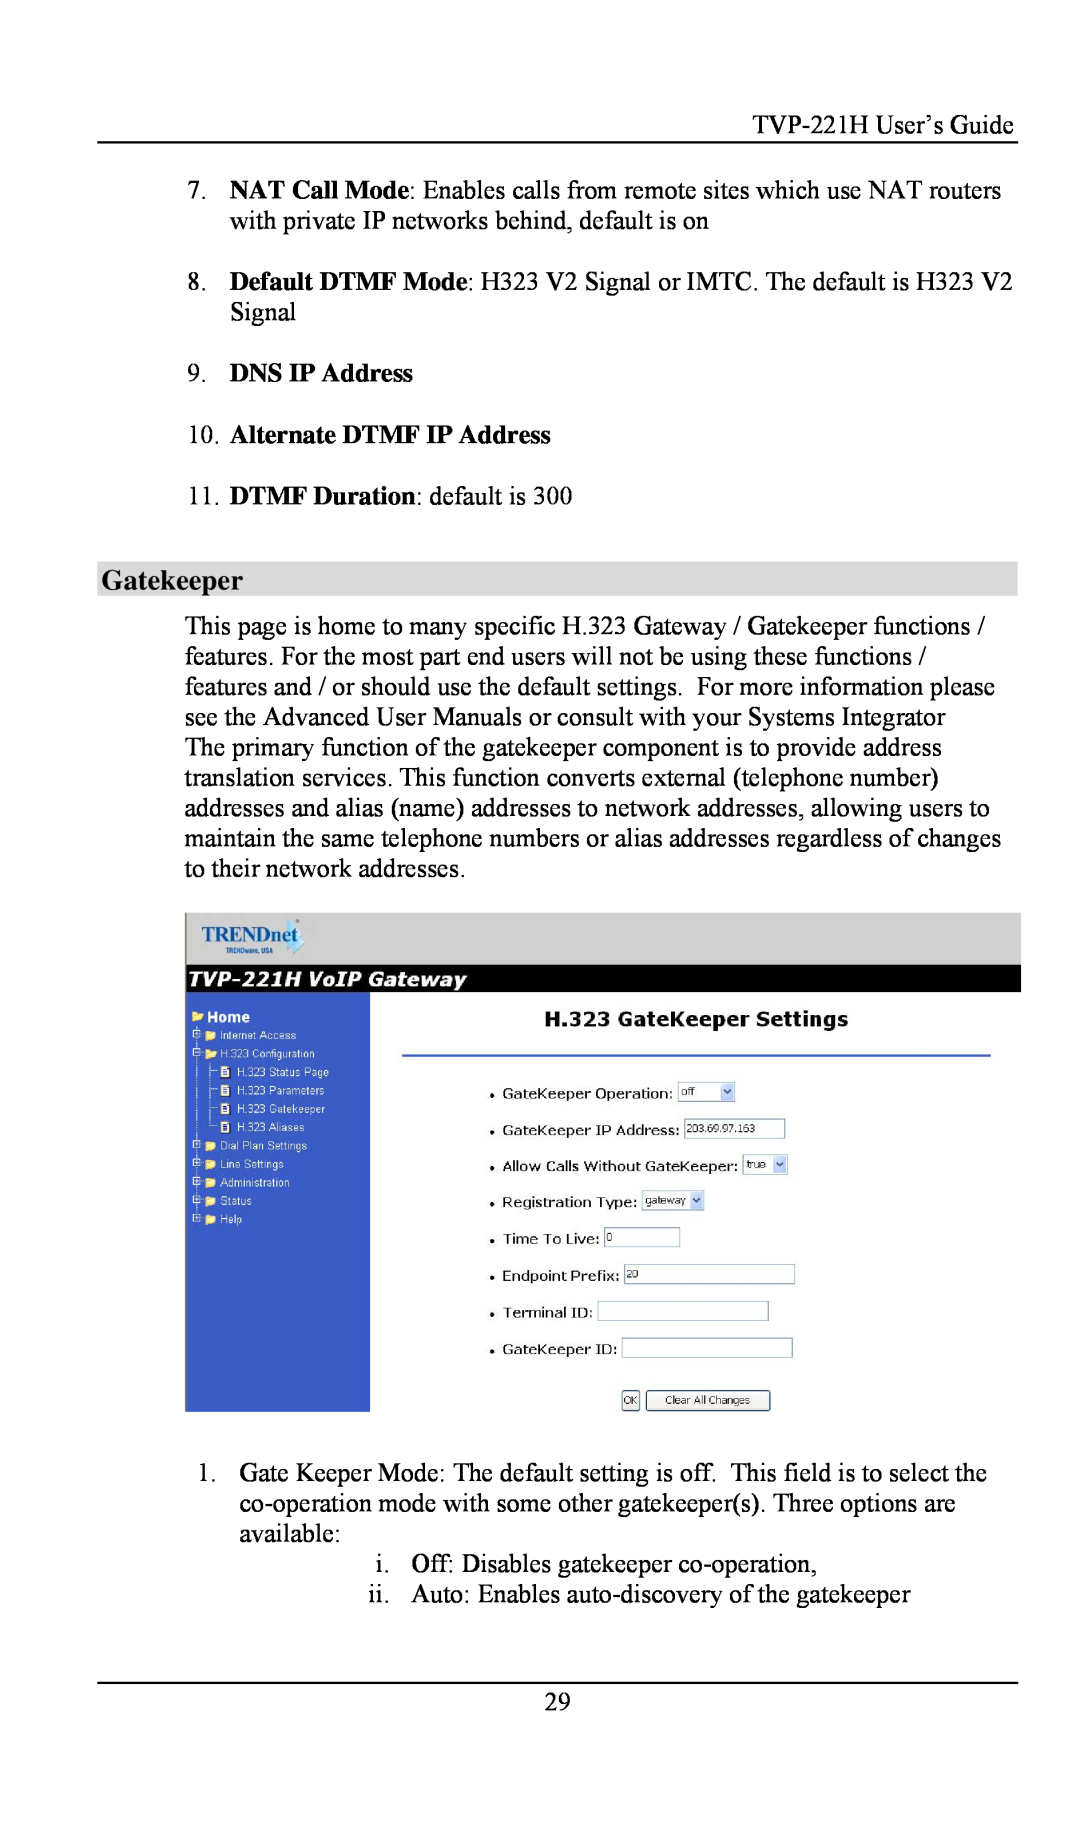 TRENDnet VoIP Gateway, TVP- 221H manual Gatekeeper, DNS IP Address 10. Alternate DTMF IP Address 